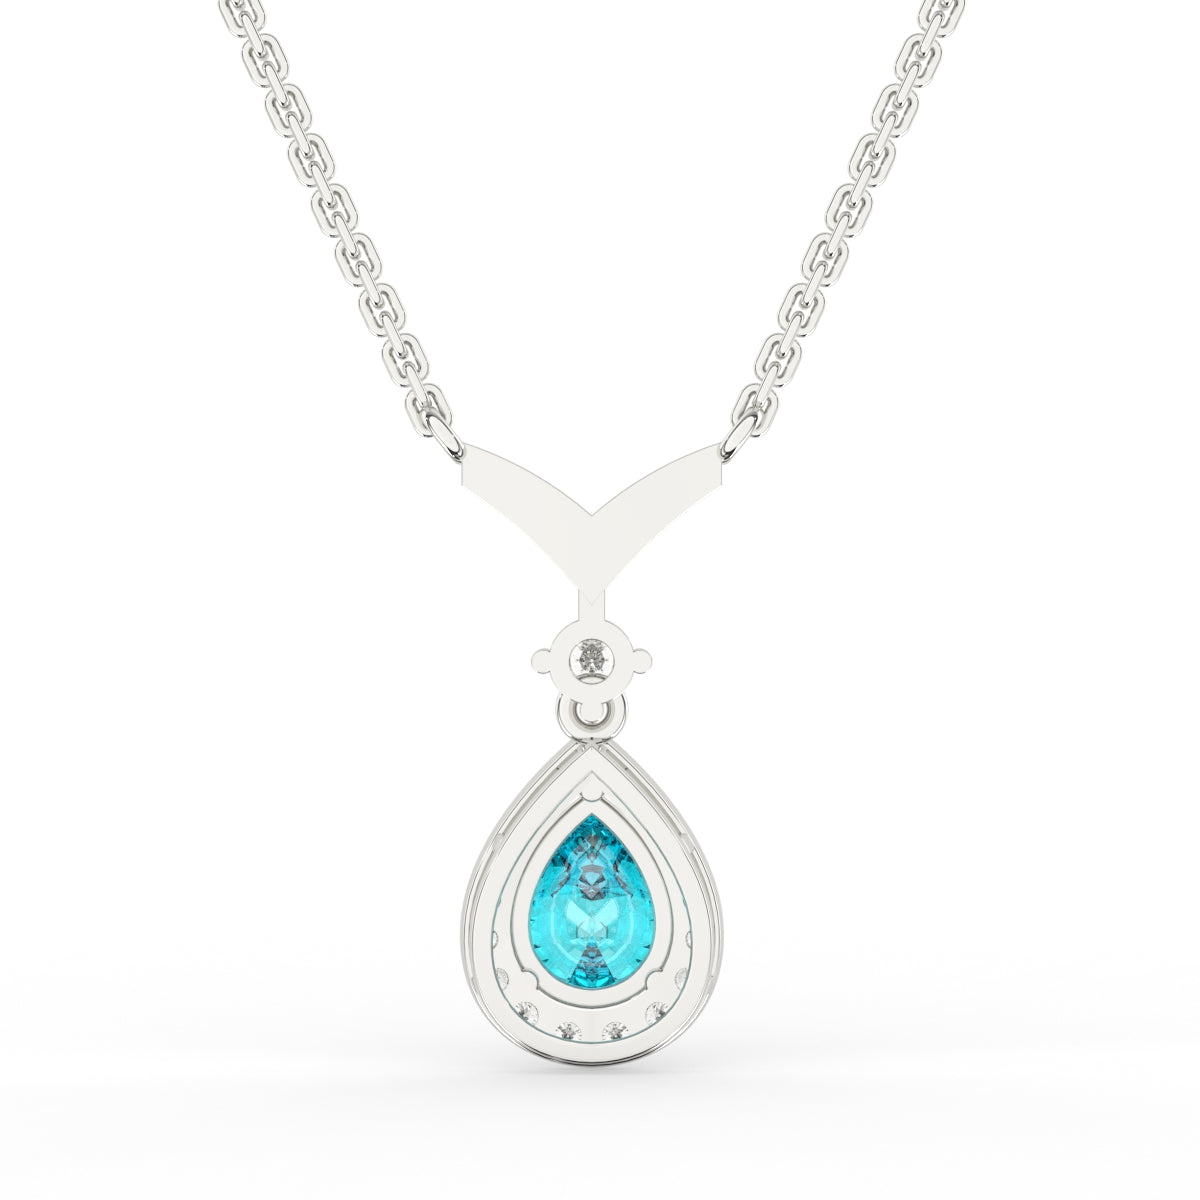 Blue pear diamond pendant chain